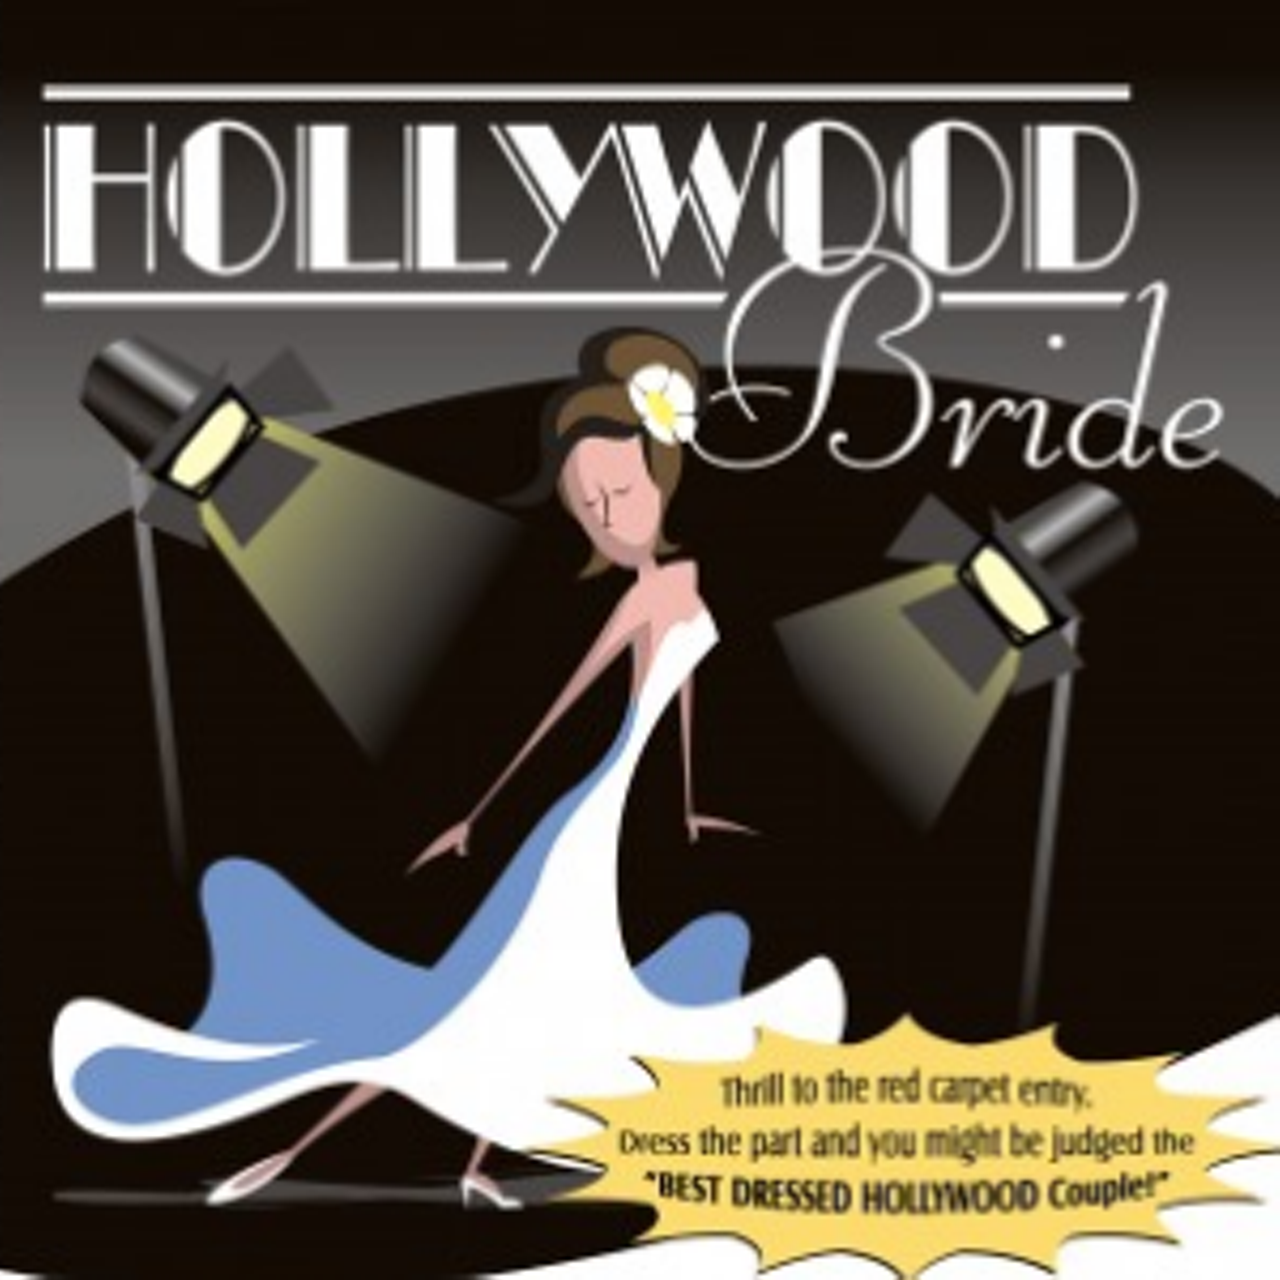 Hollywood Bride